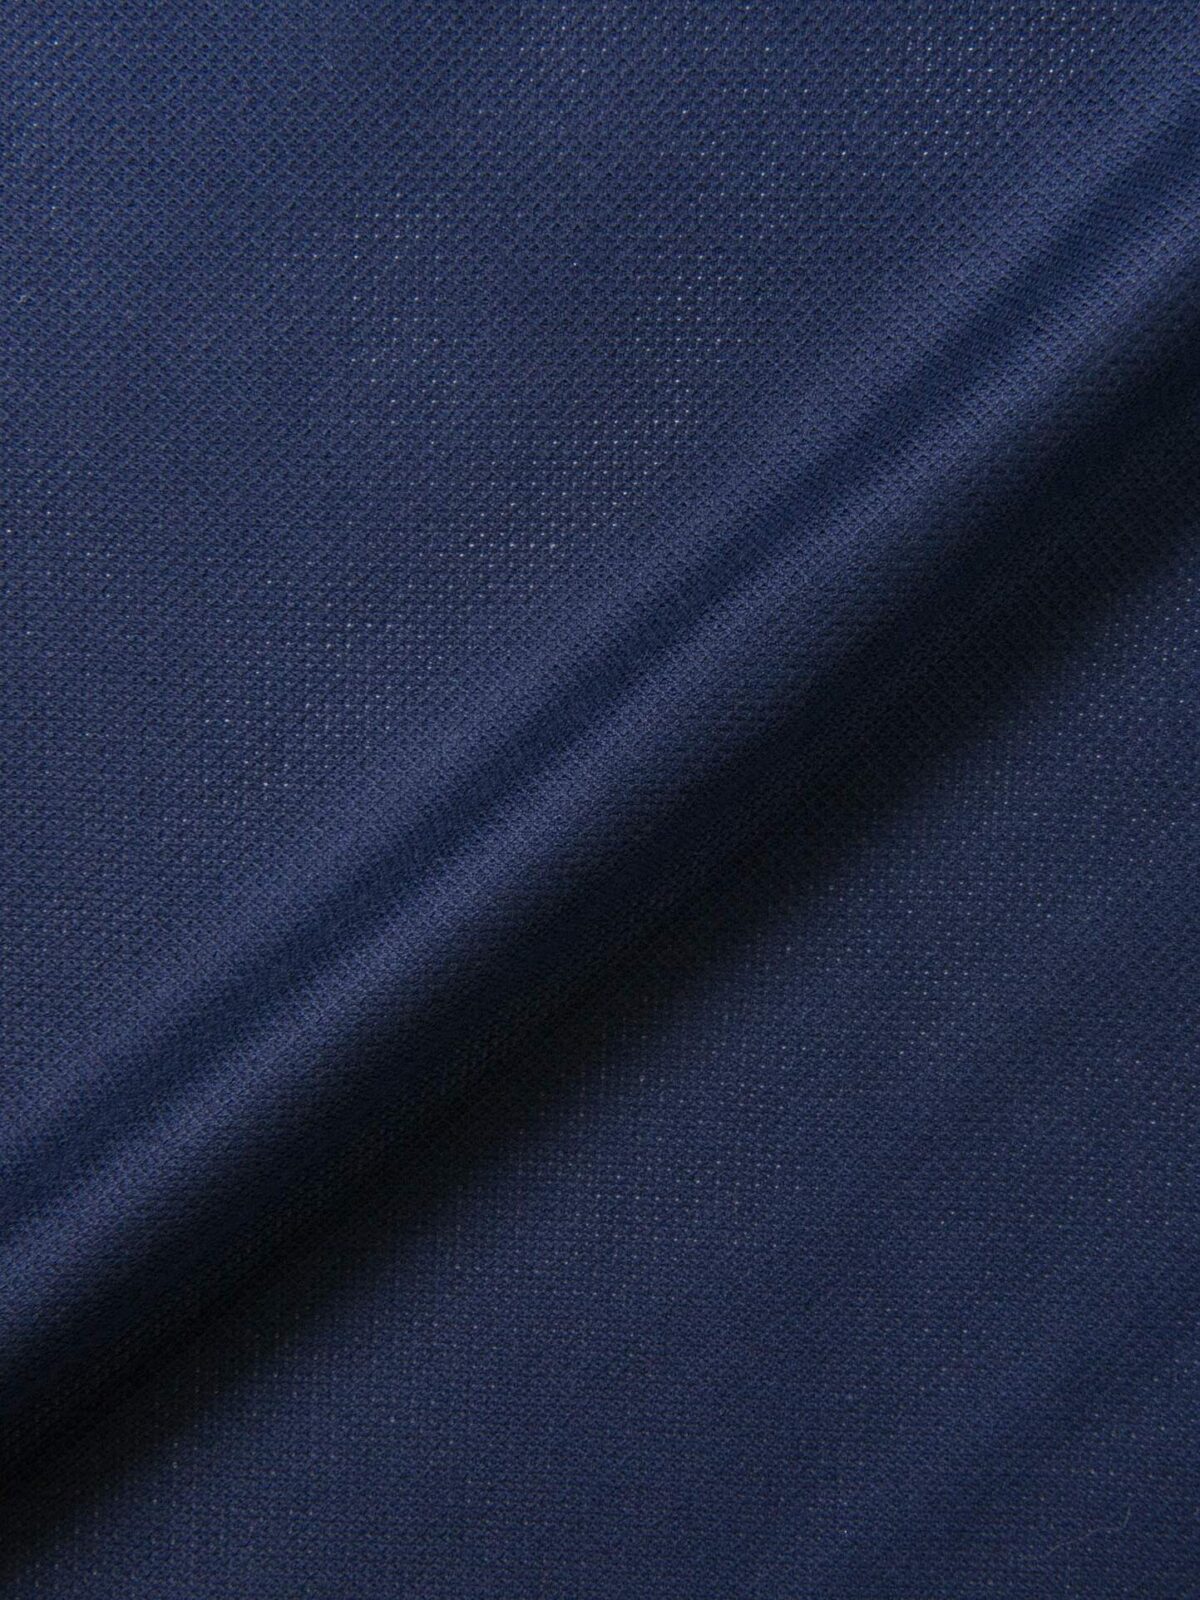 Minetta Navy Airtex Shirts by Proper Cloth